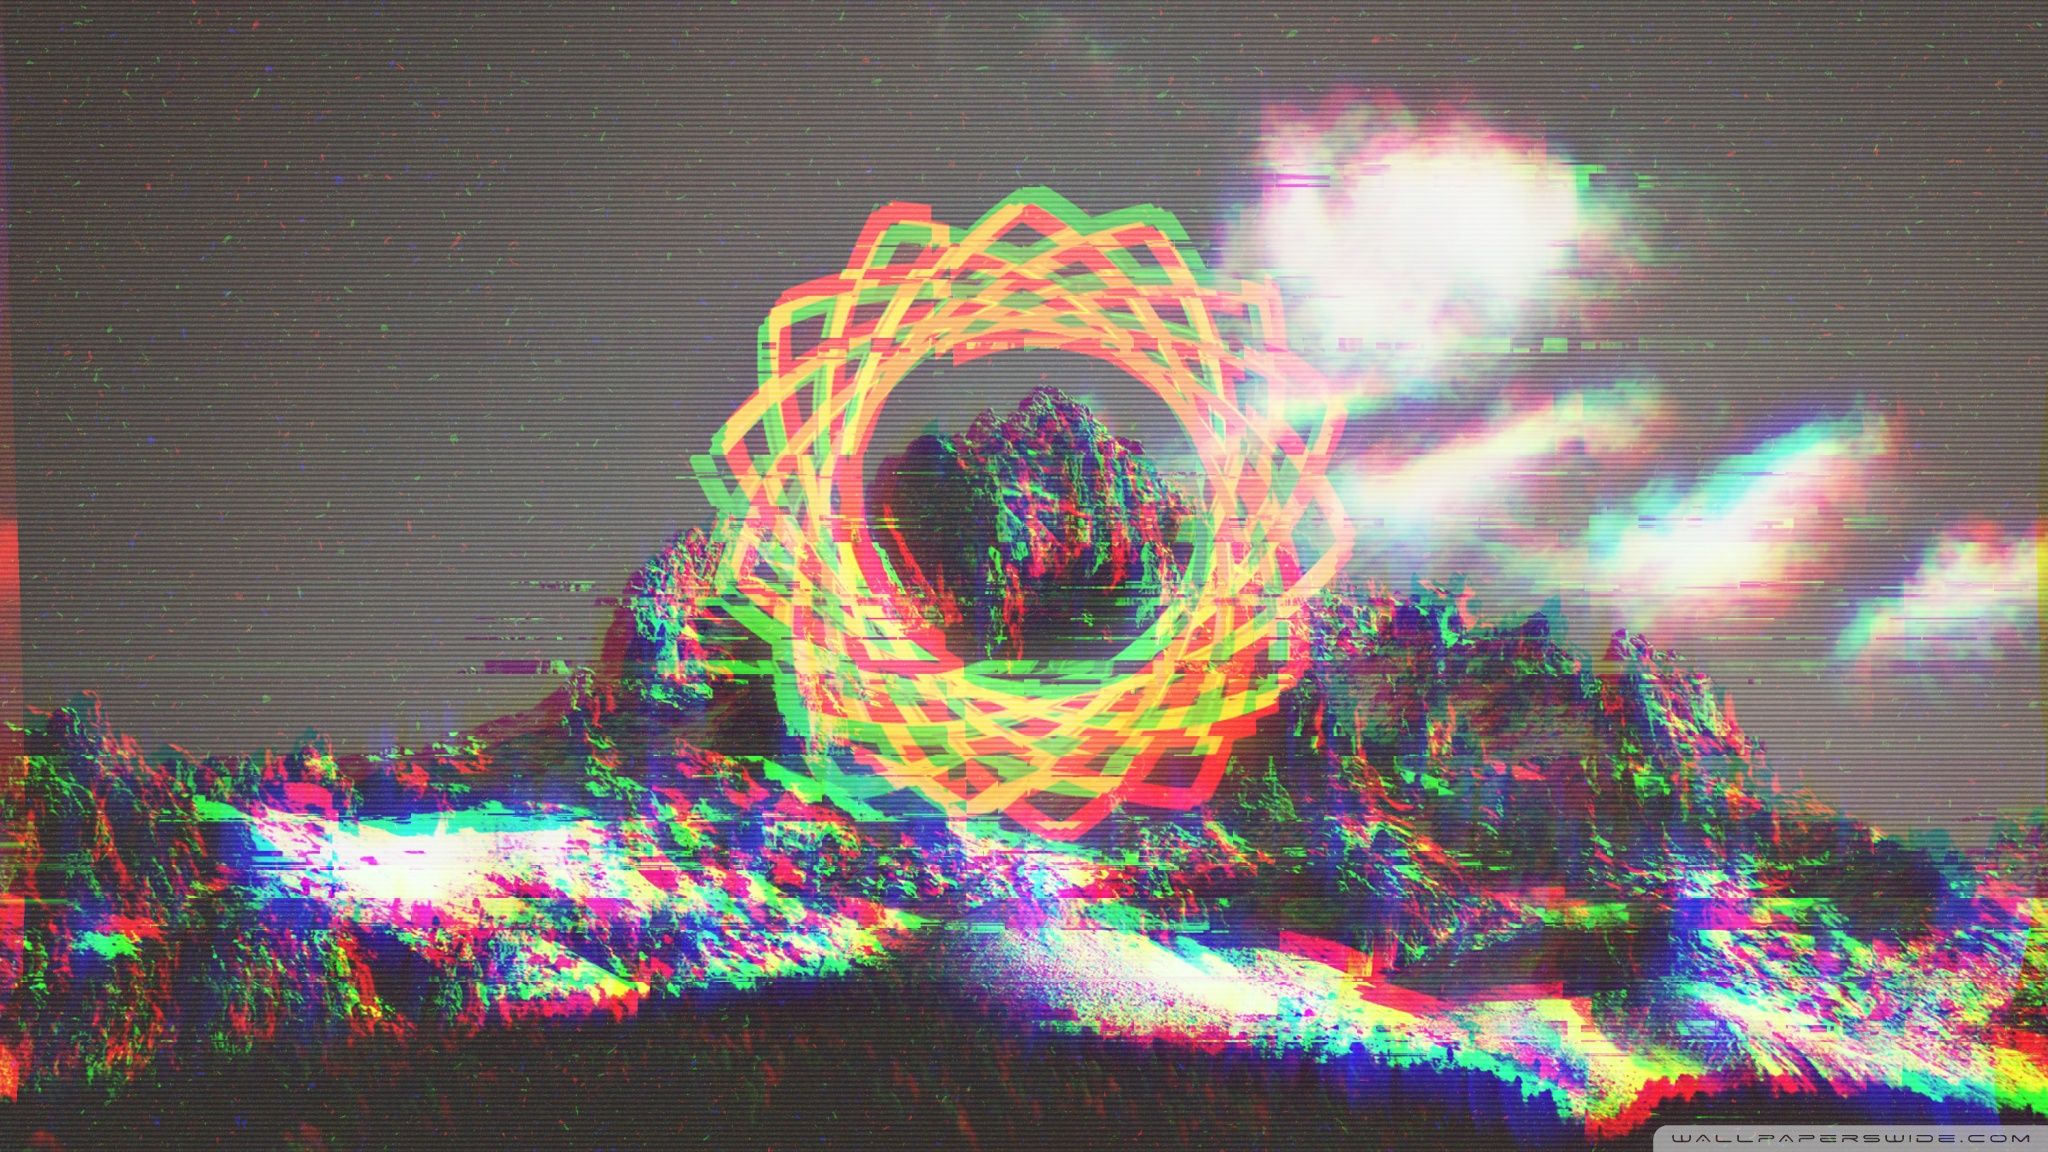 Glitch art of a mountain with a rainbow spiral - Glitch